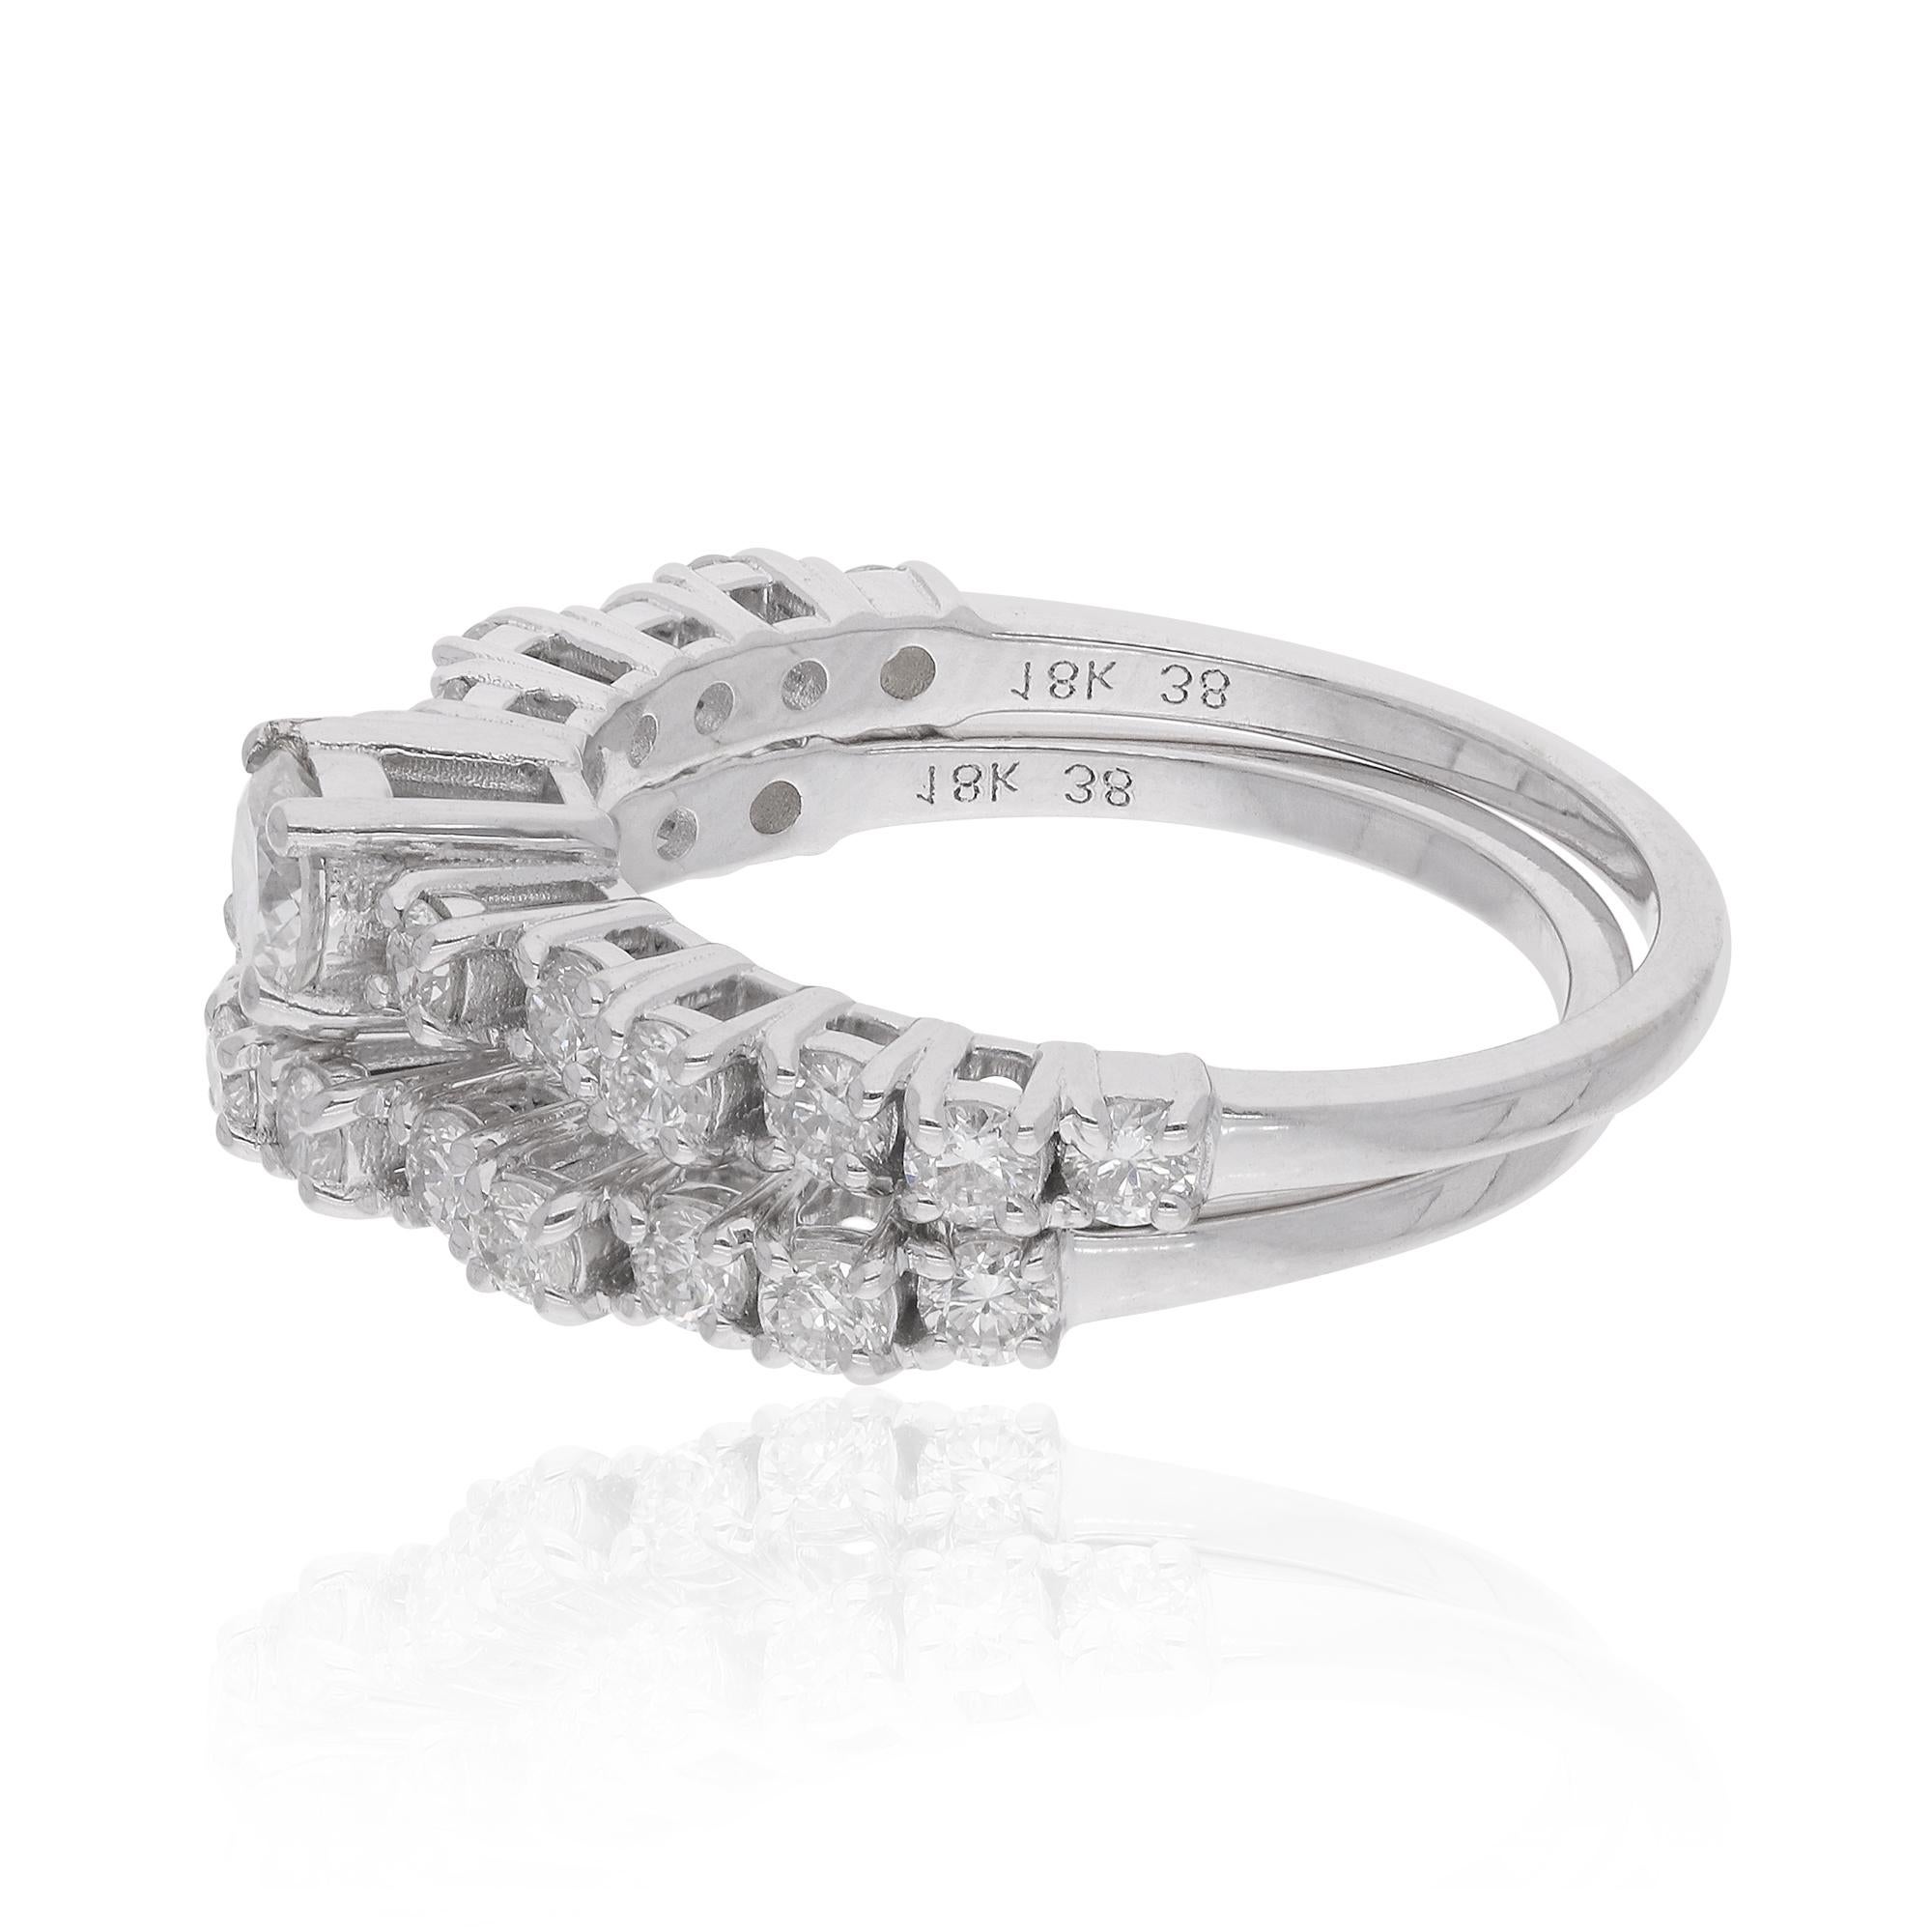 1.15 Carat Diamond Stackable Ring Set 18 Karat White Gold Handmade Fine Jewelry For Sale 1